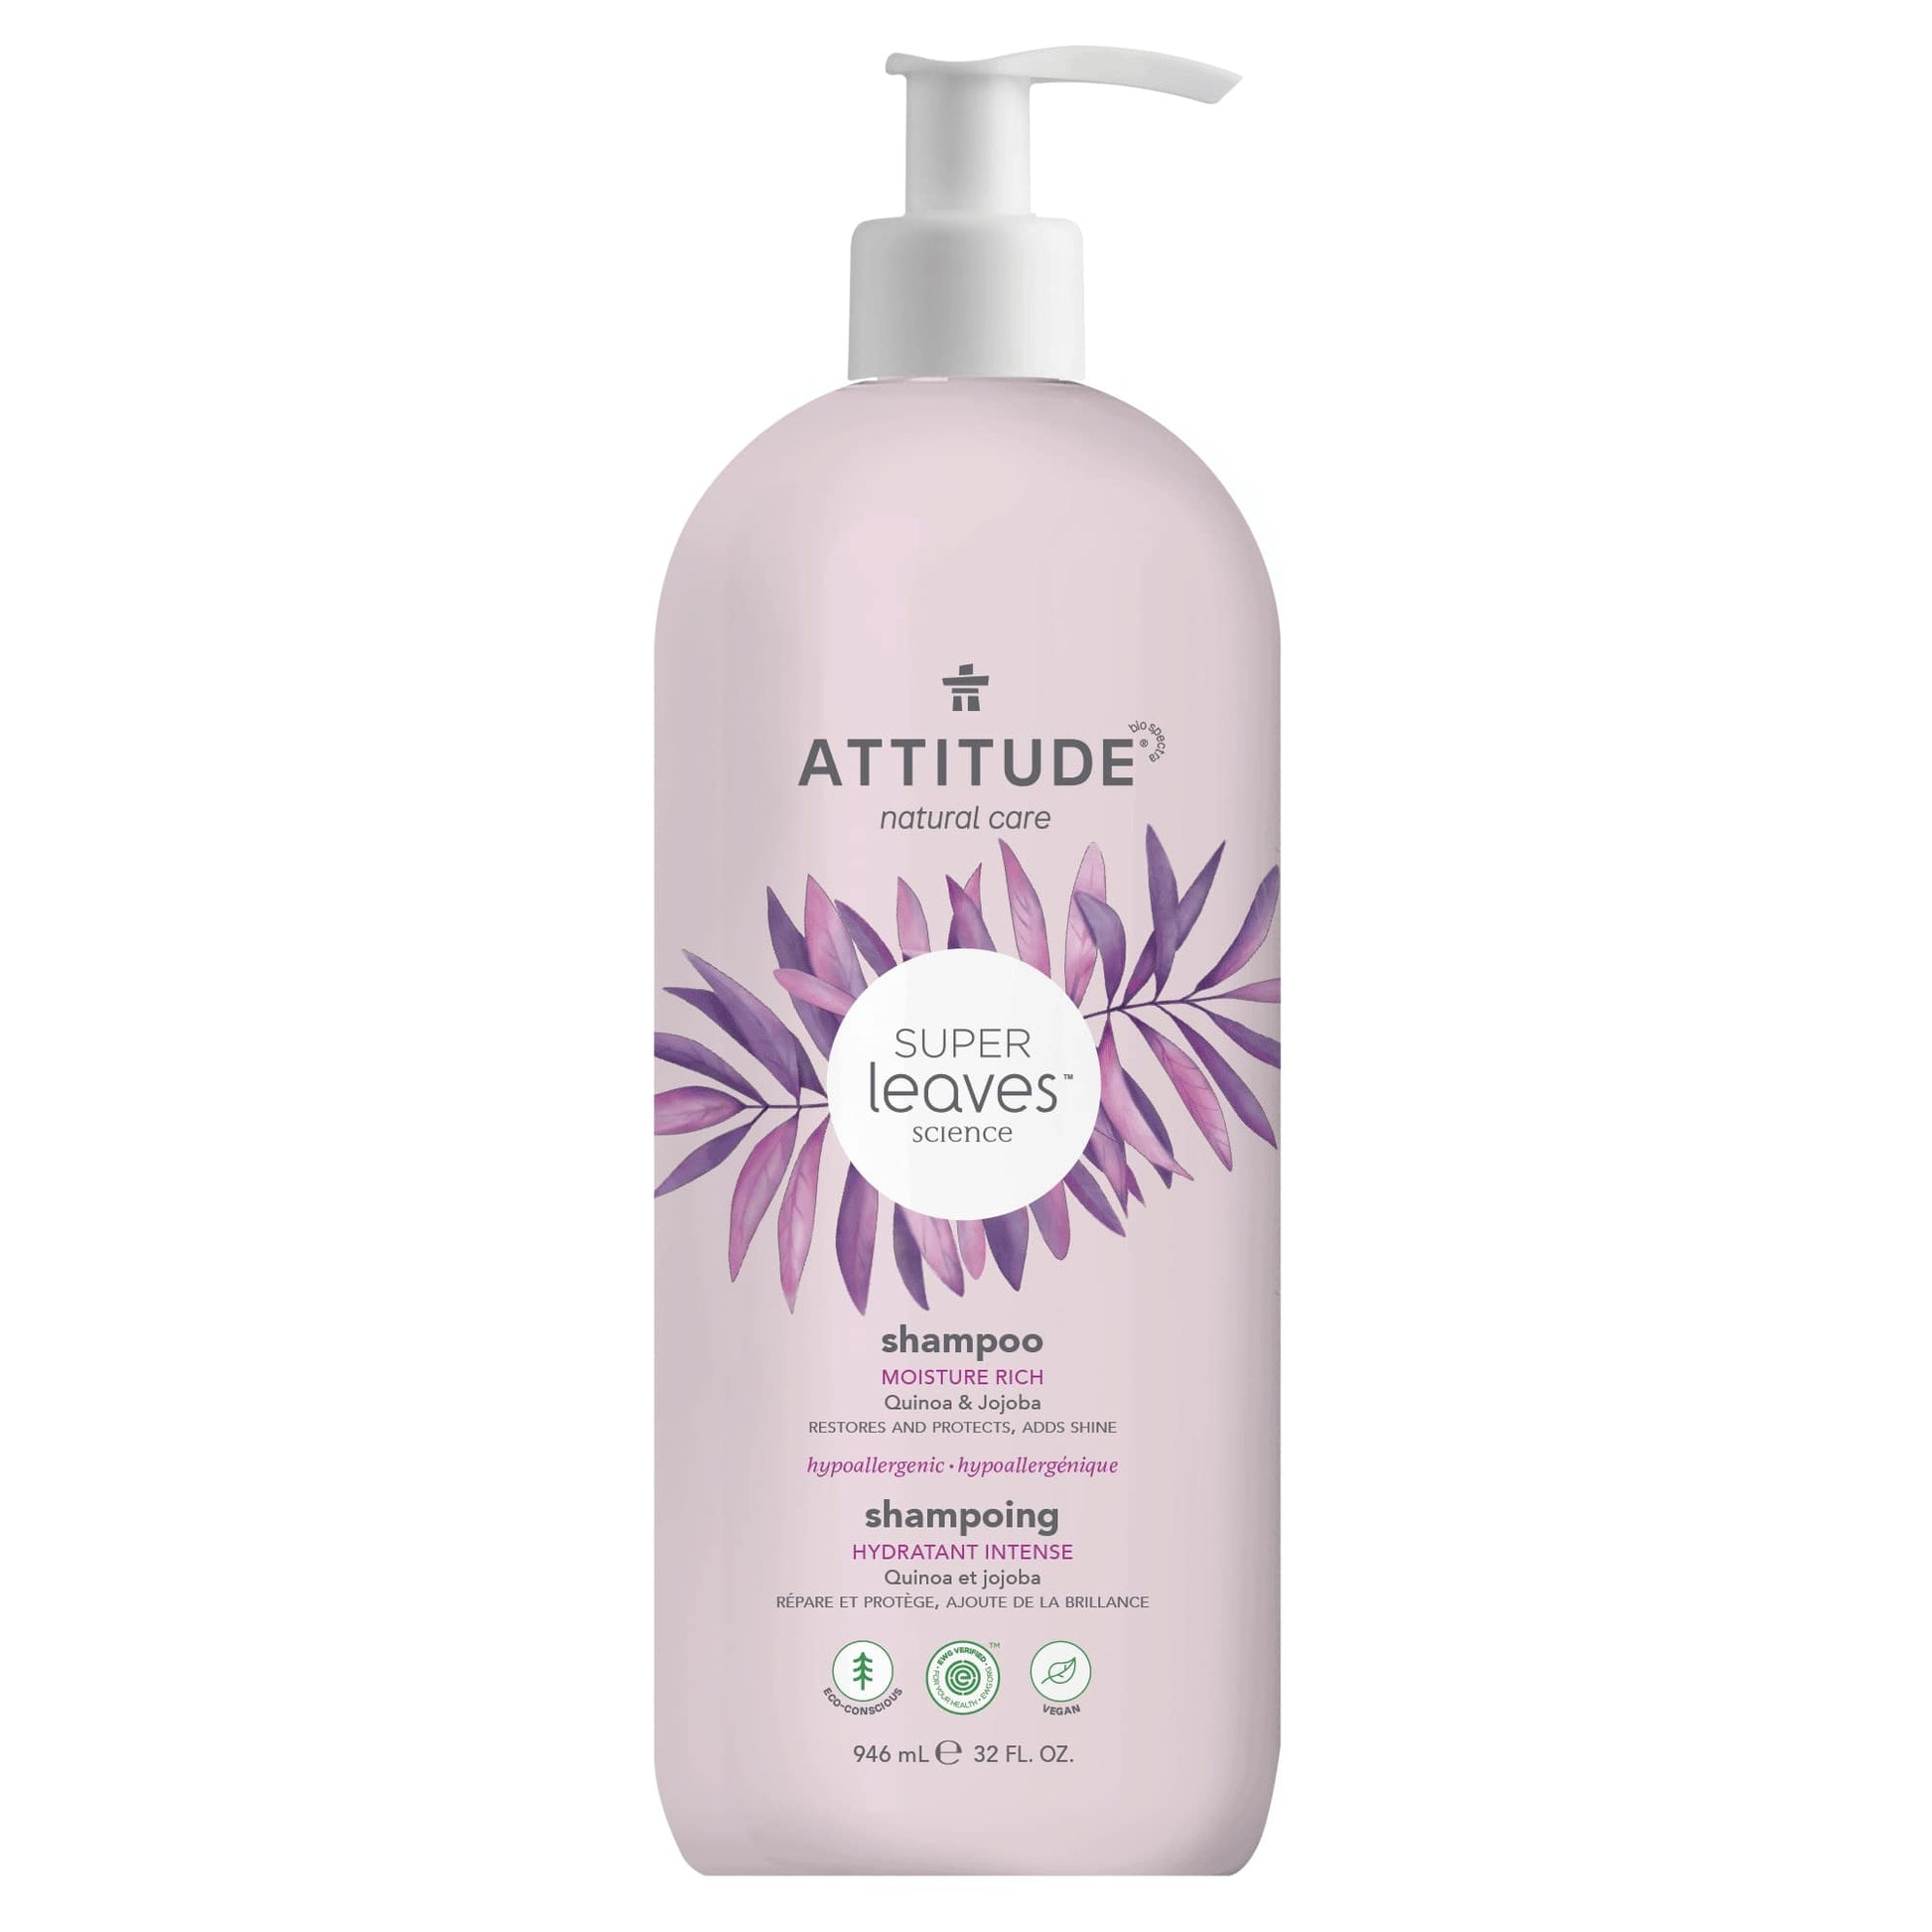 ATTITUDE Super leaves™ Shampoo Moisture Rich Restores and protects, adds shine _en?_main? 32 FL. OZ.